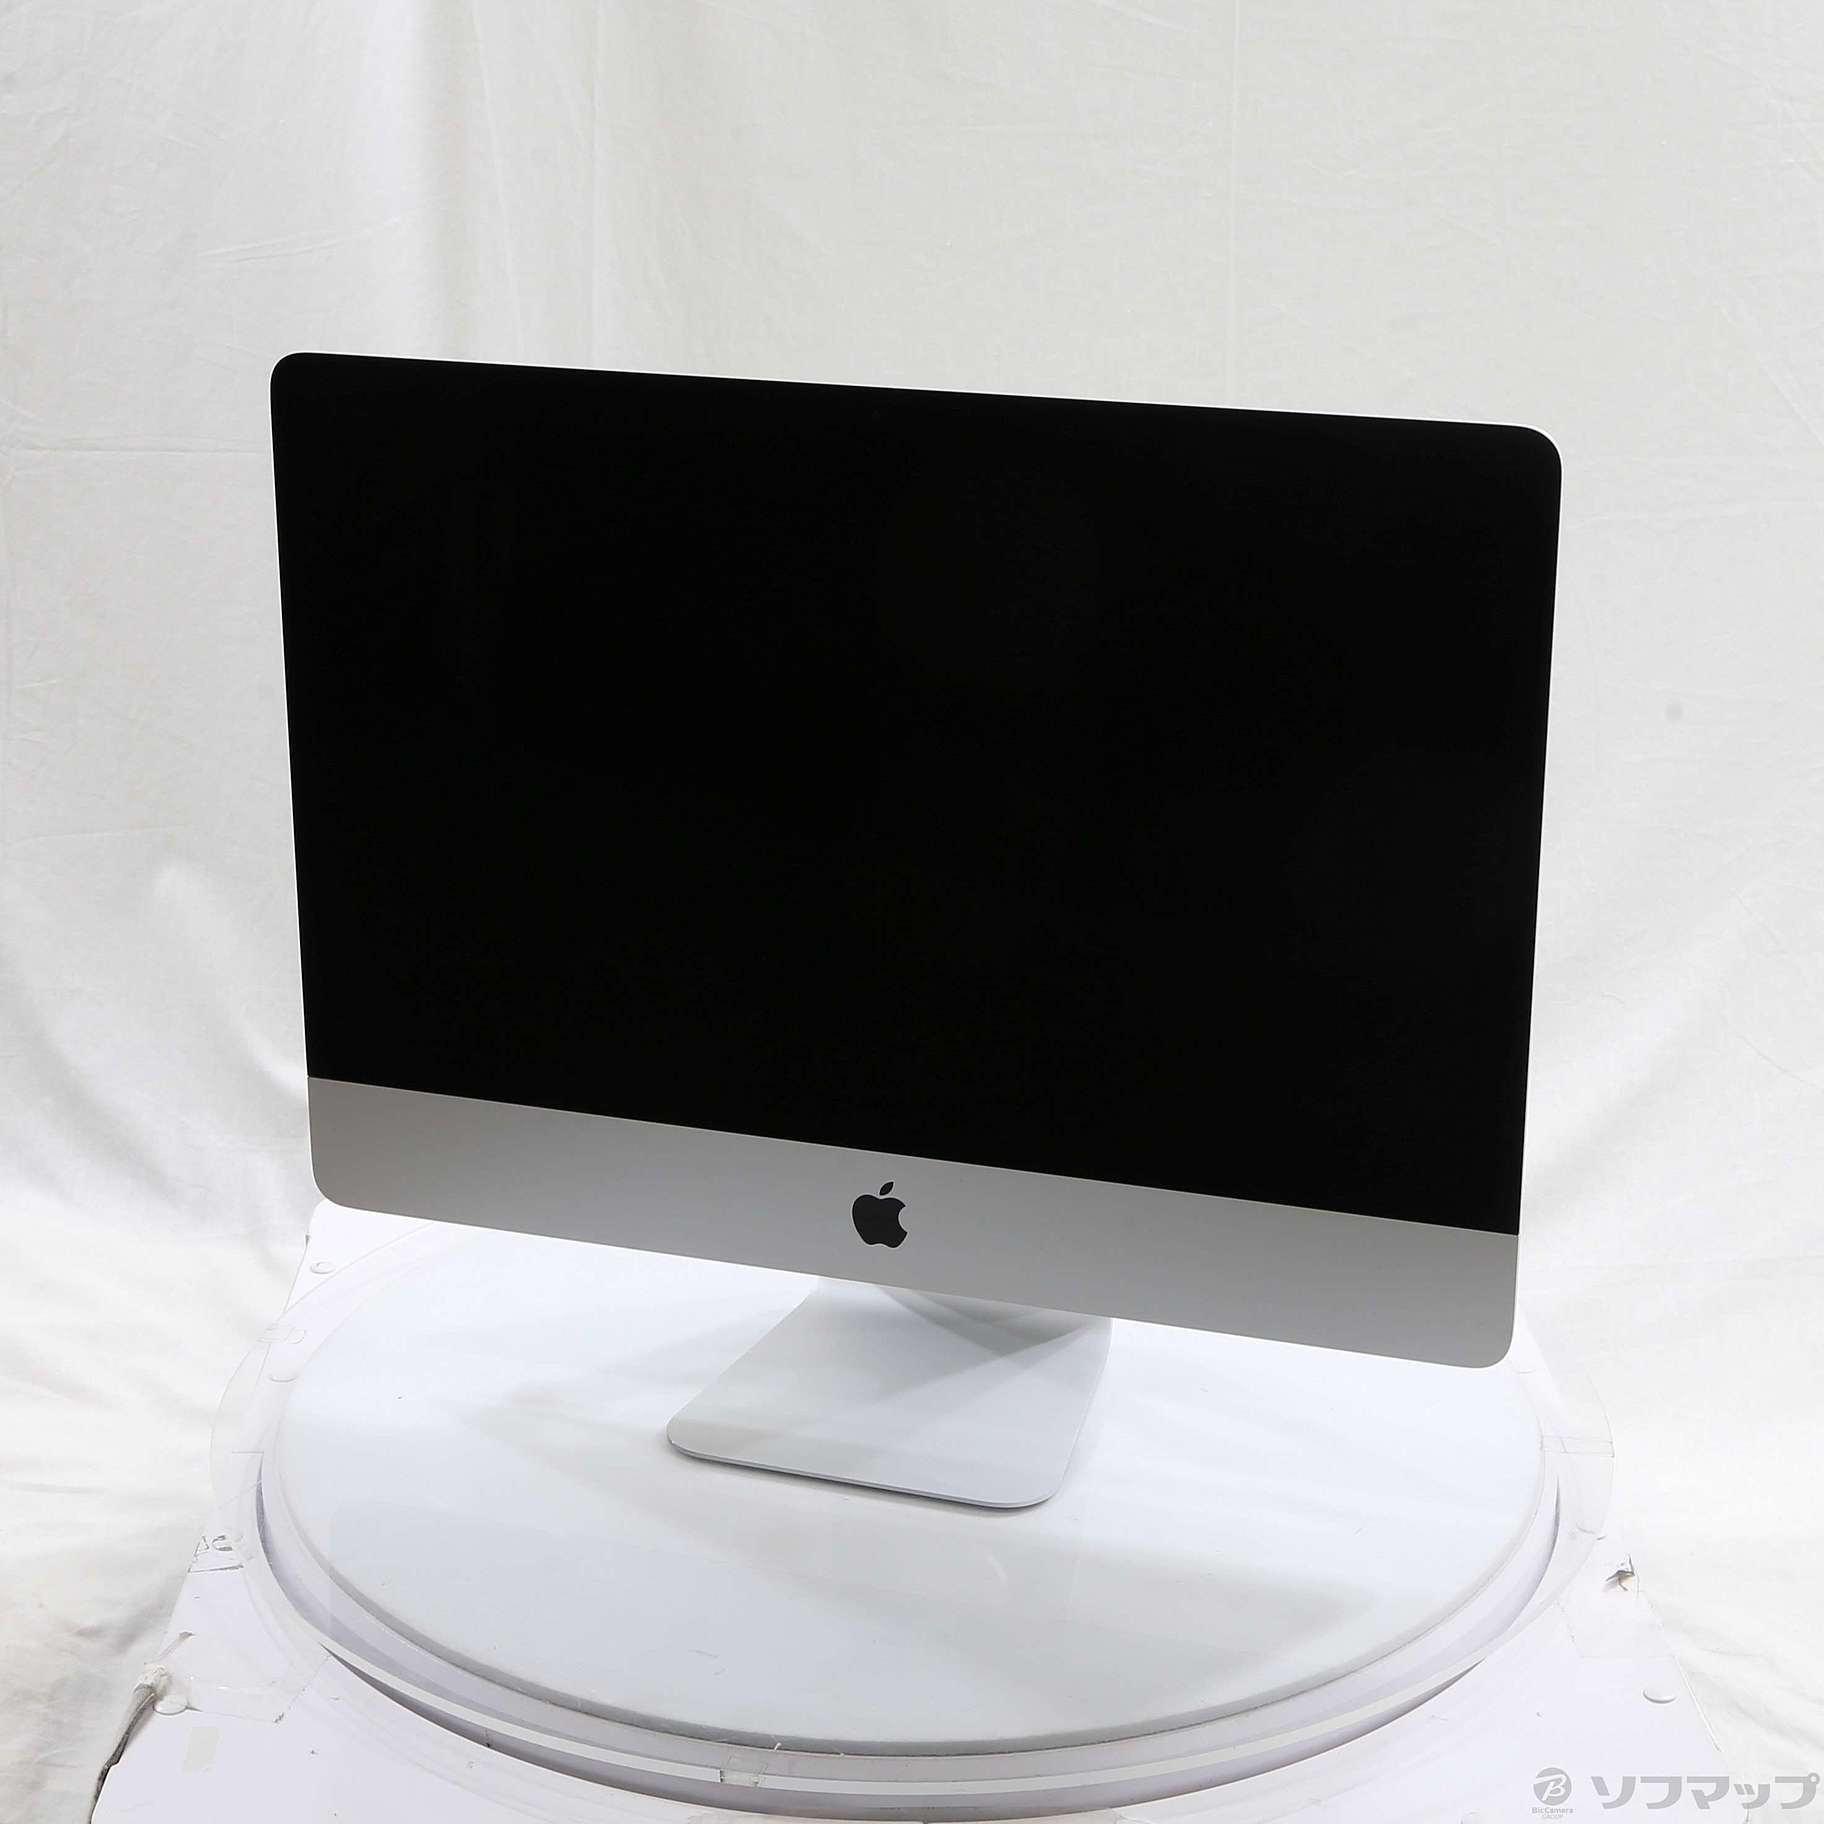 中古品〕 iMac 21.5-inch Late 2015 MK442J／A Core_i5 2.8GHz 8GB ...